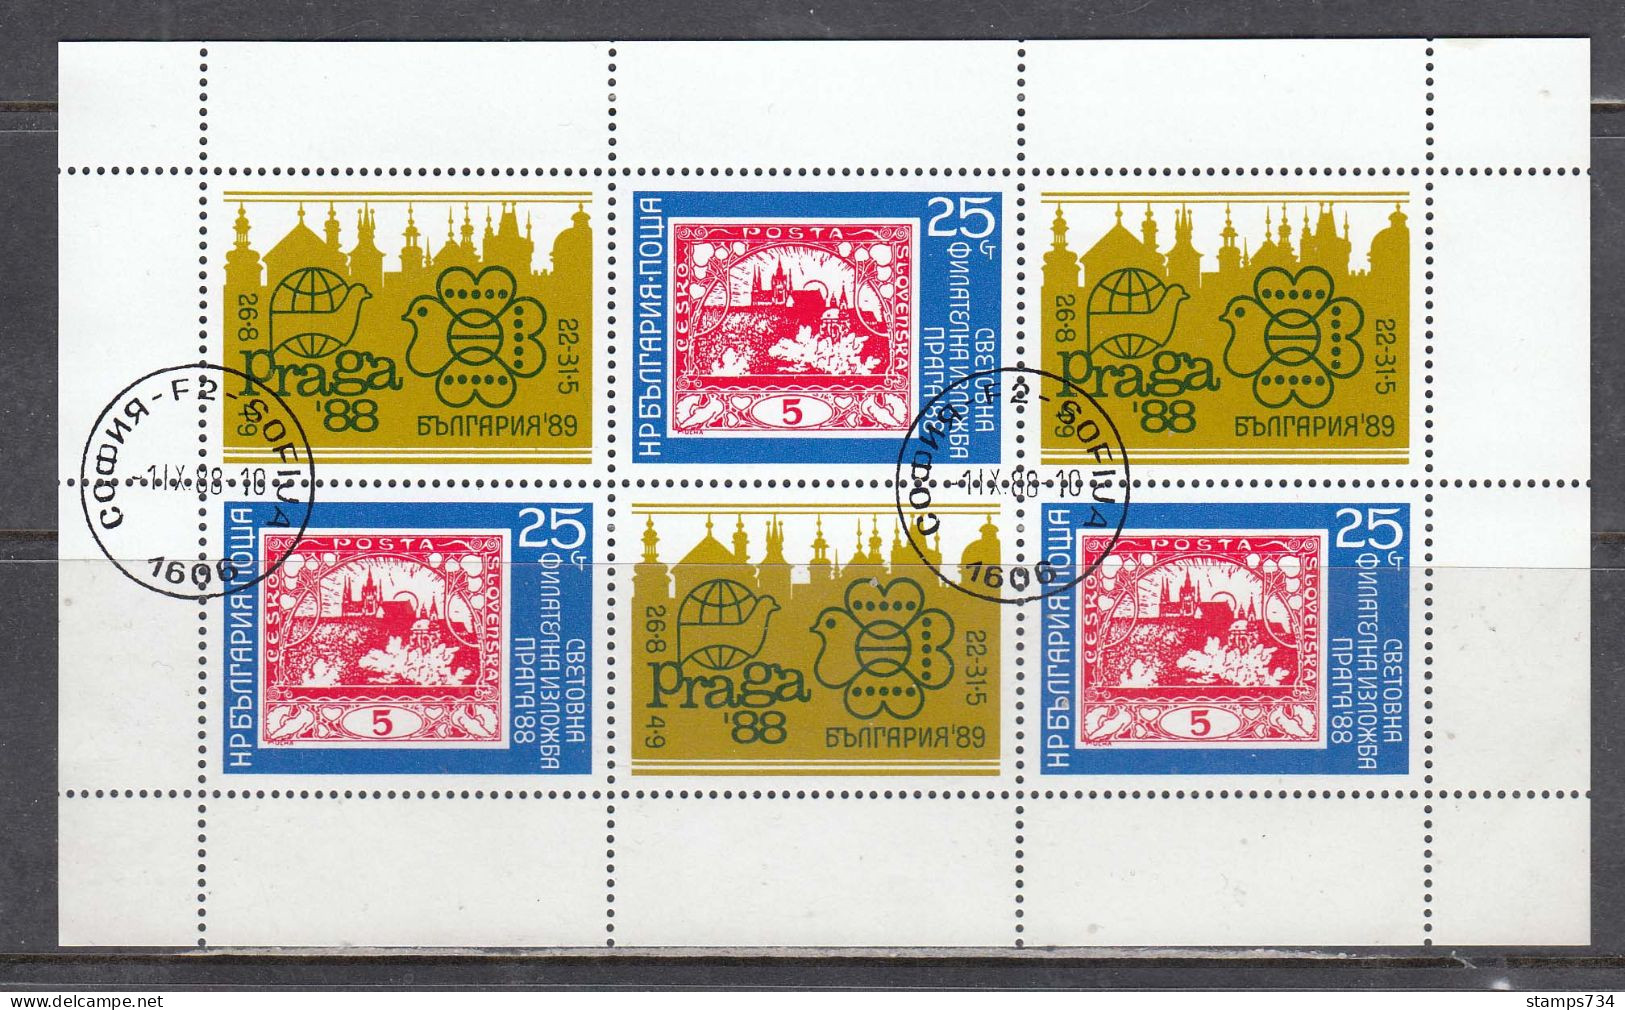 Bulgaria 1988 - International Stamp Exhibition PRAGA'88, Mi-Nr. 3696A In Sheet, Used - Used Stamps